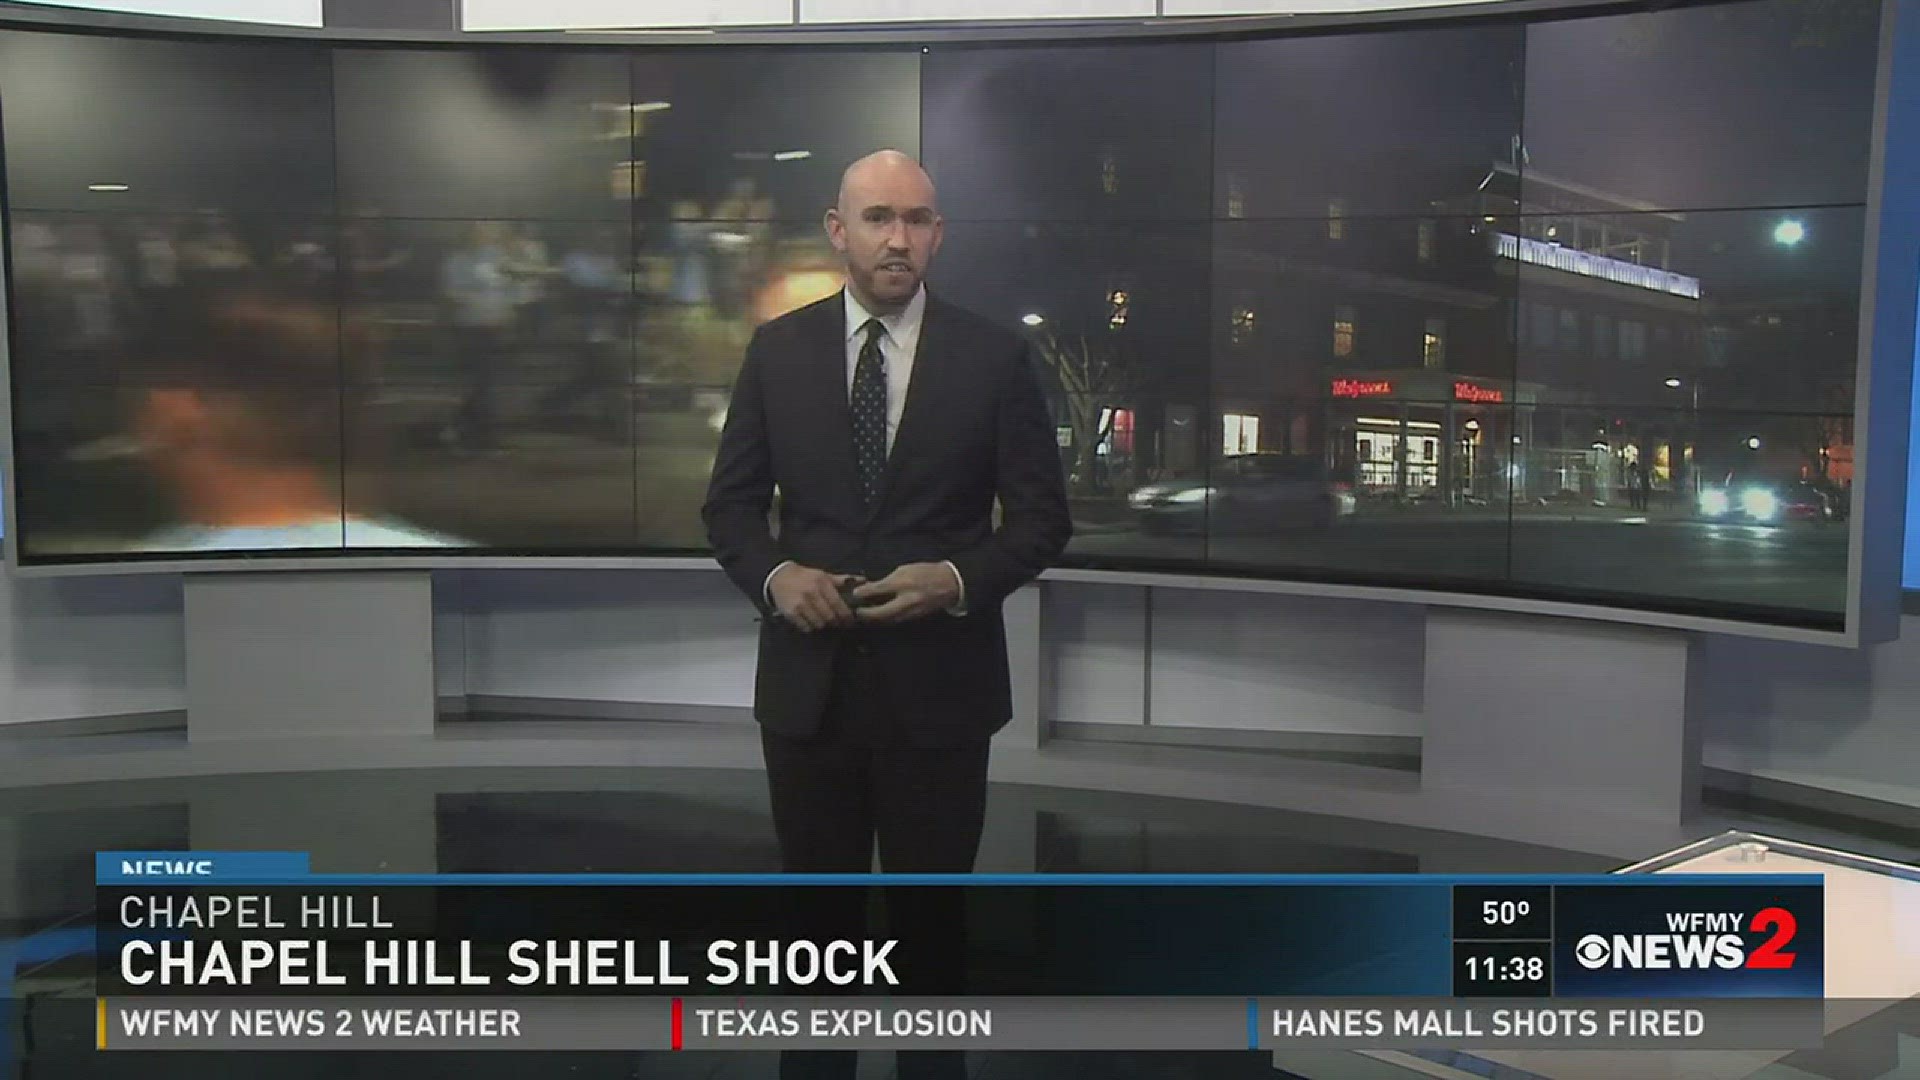 ShellShock Live News and Videos